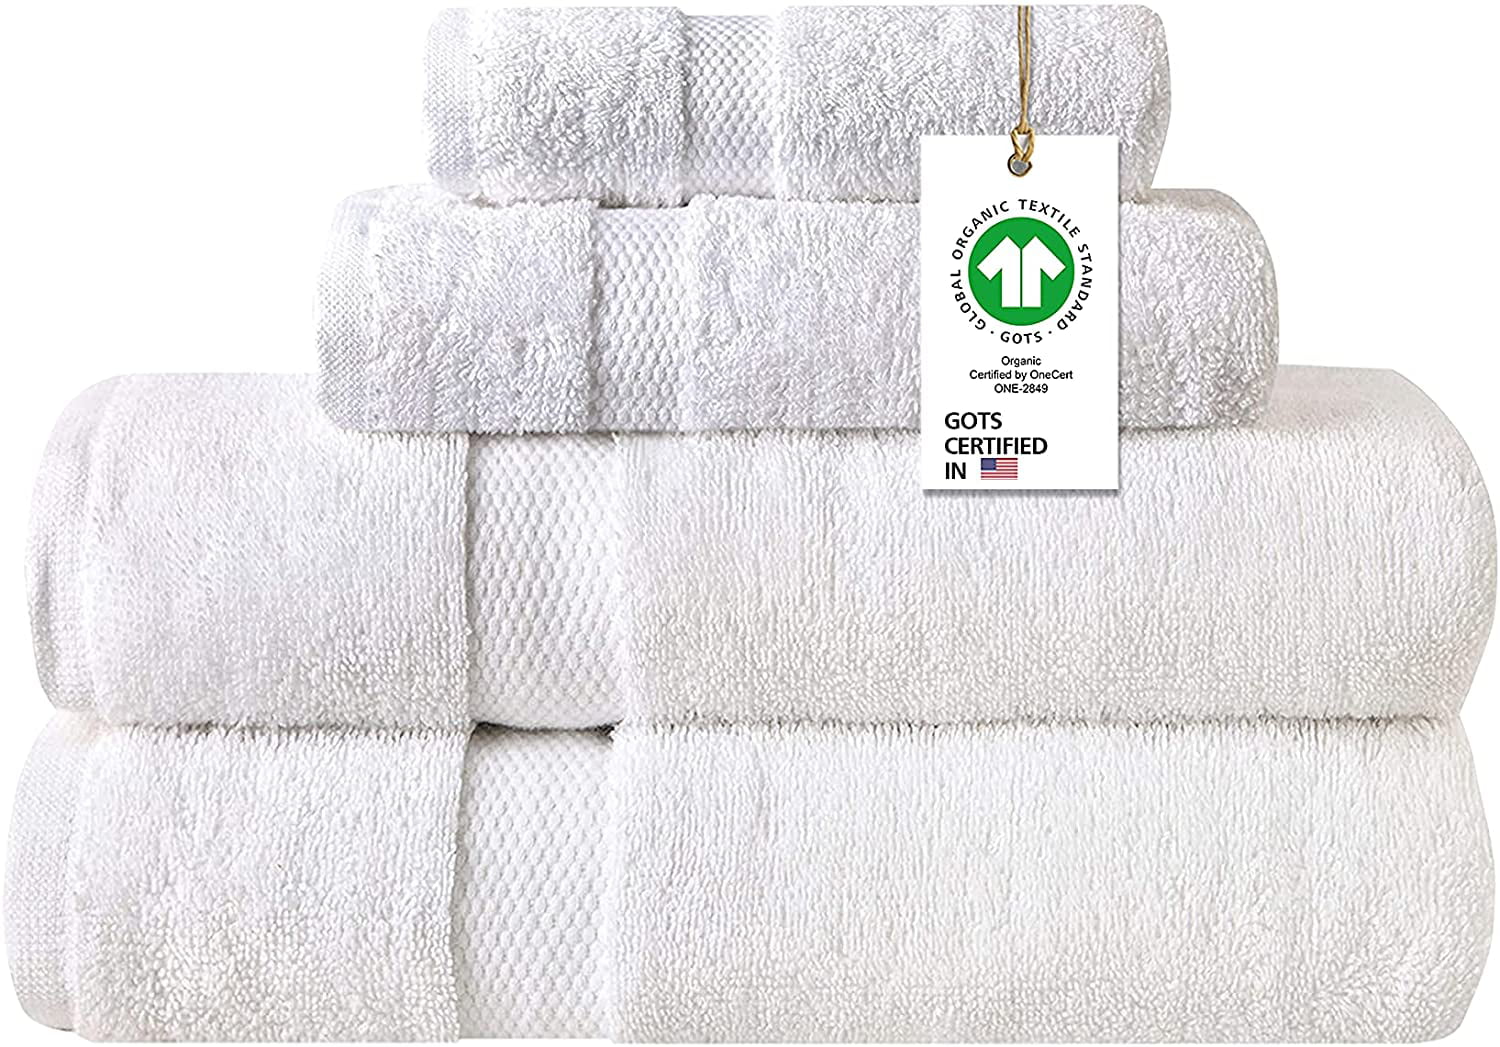 Details about   Hot Deal Organic Cotton Bathroom Washcloths Sand Set of 12 